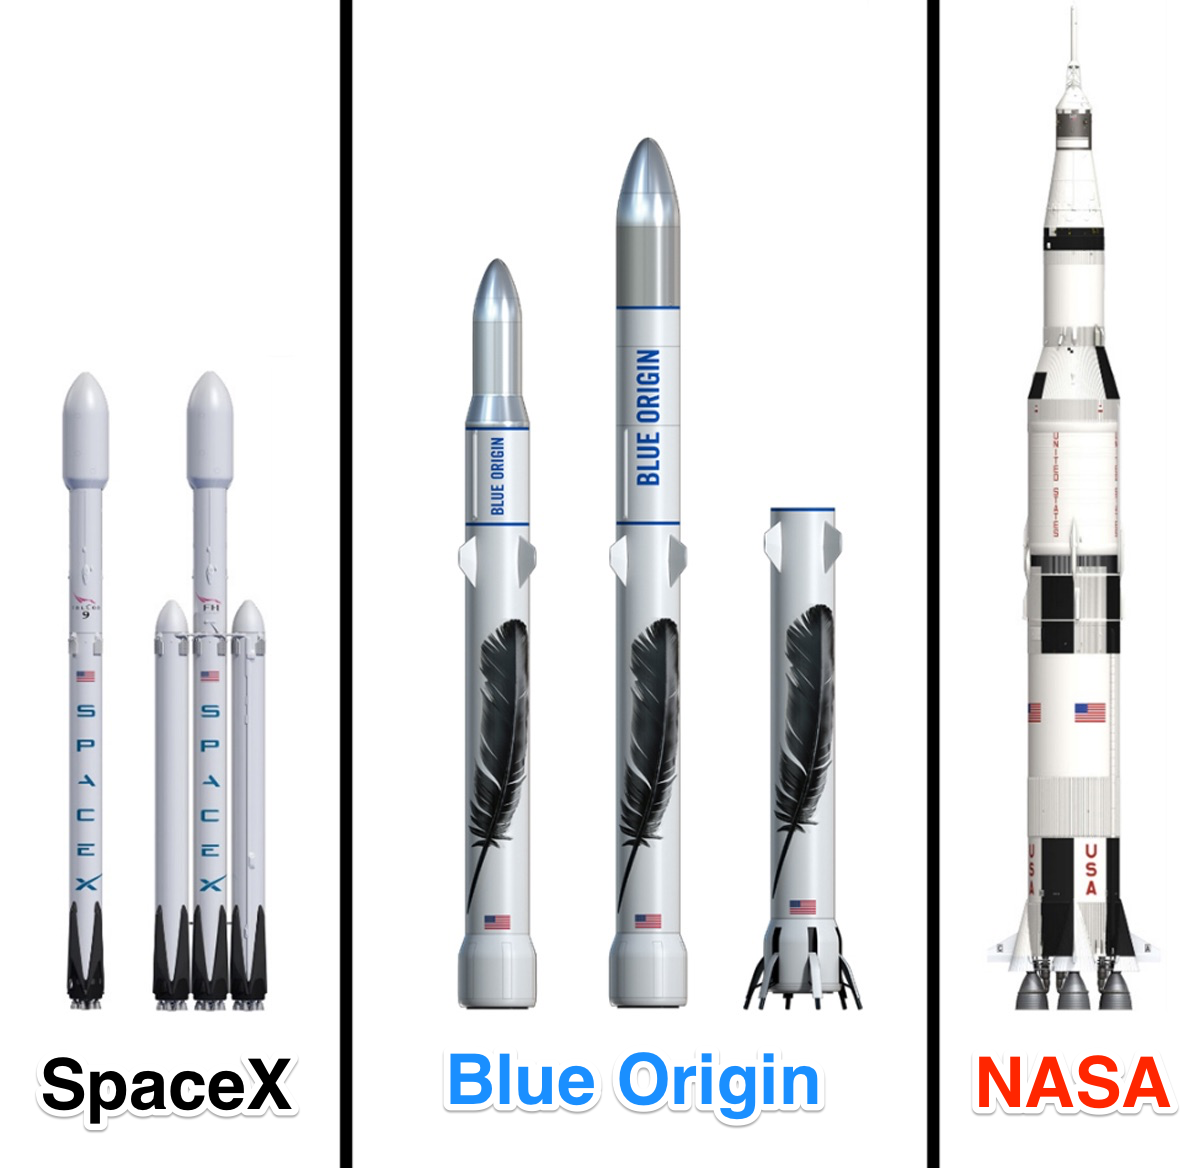 blue-origin-spacex-nasa-rockets-compared.png